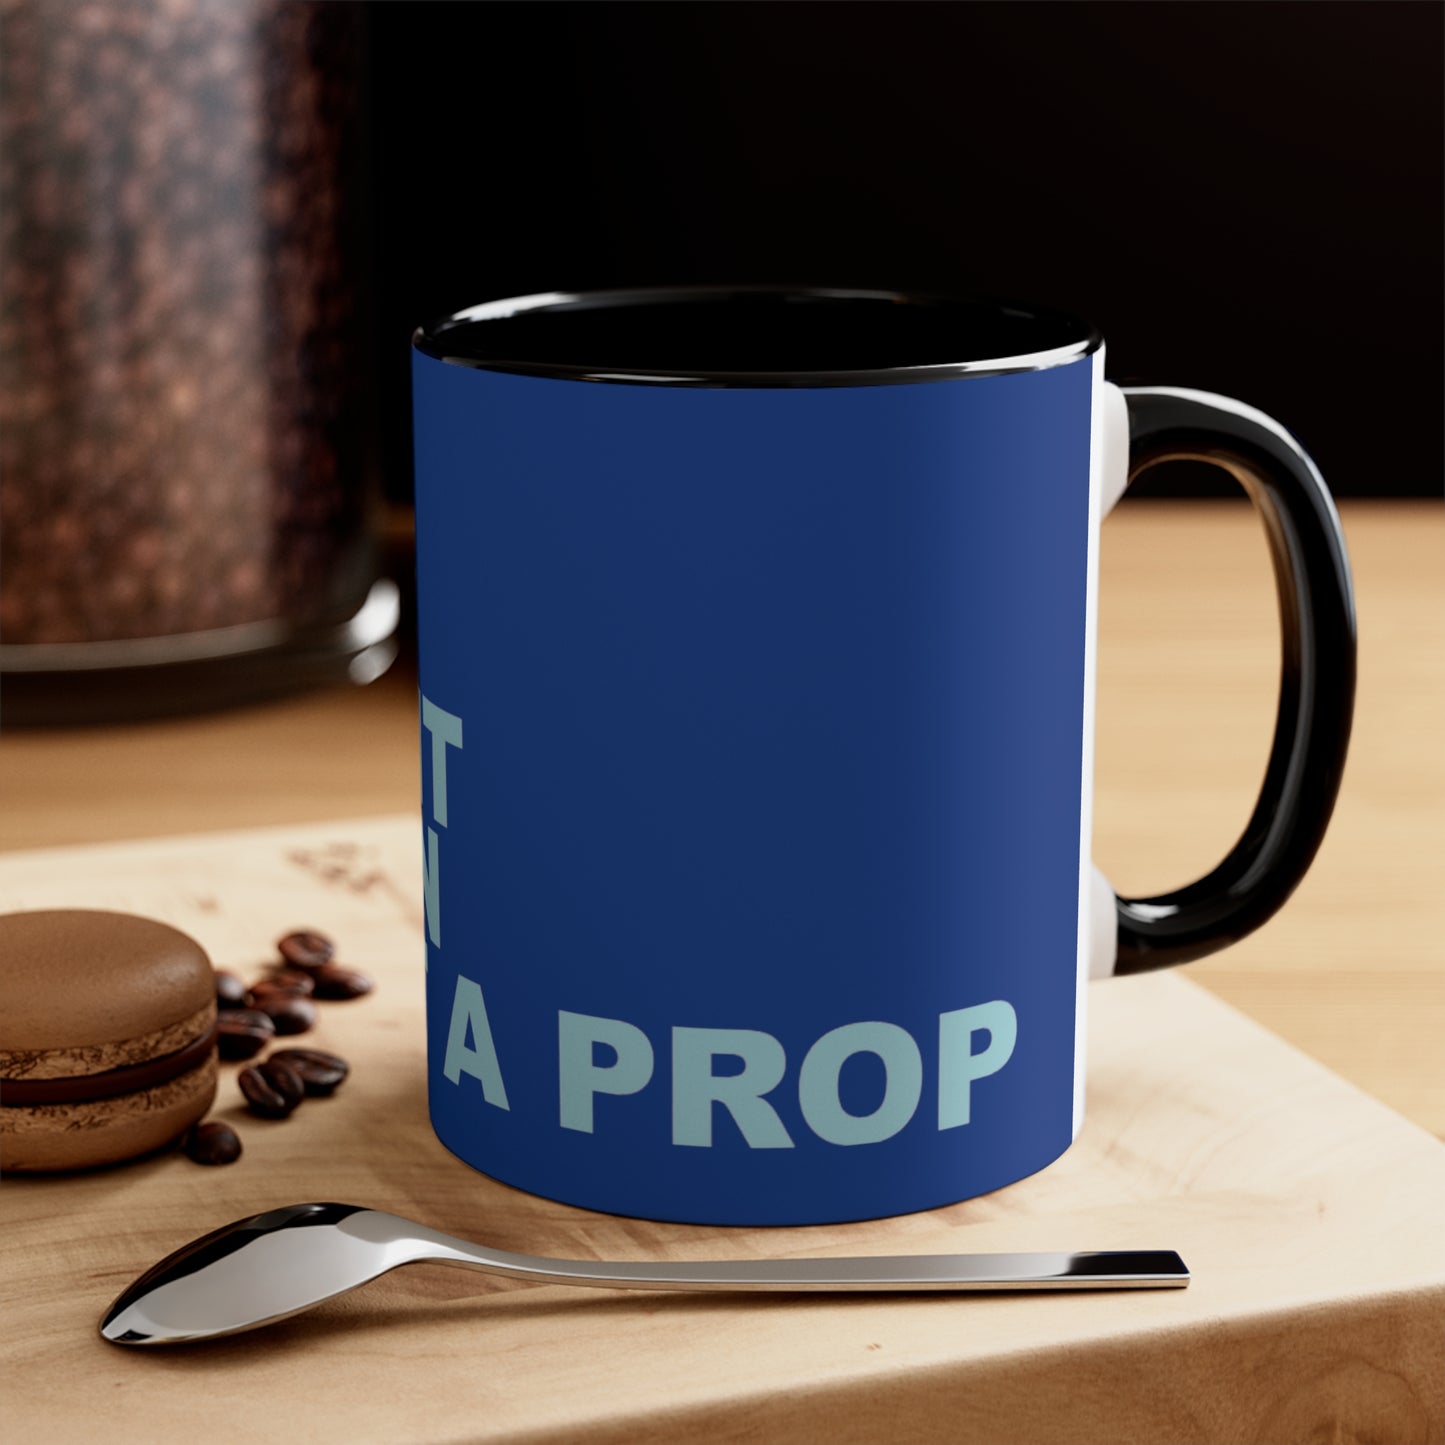 Make It A Prop Coffee Mug, 11oz